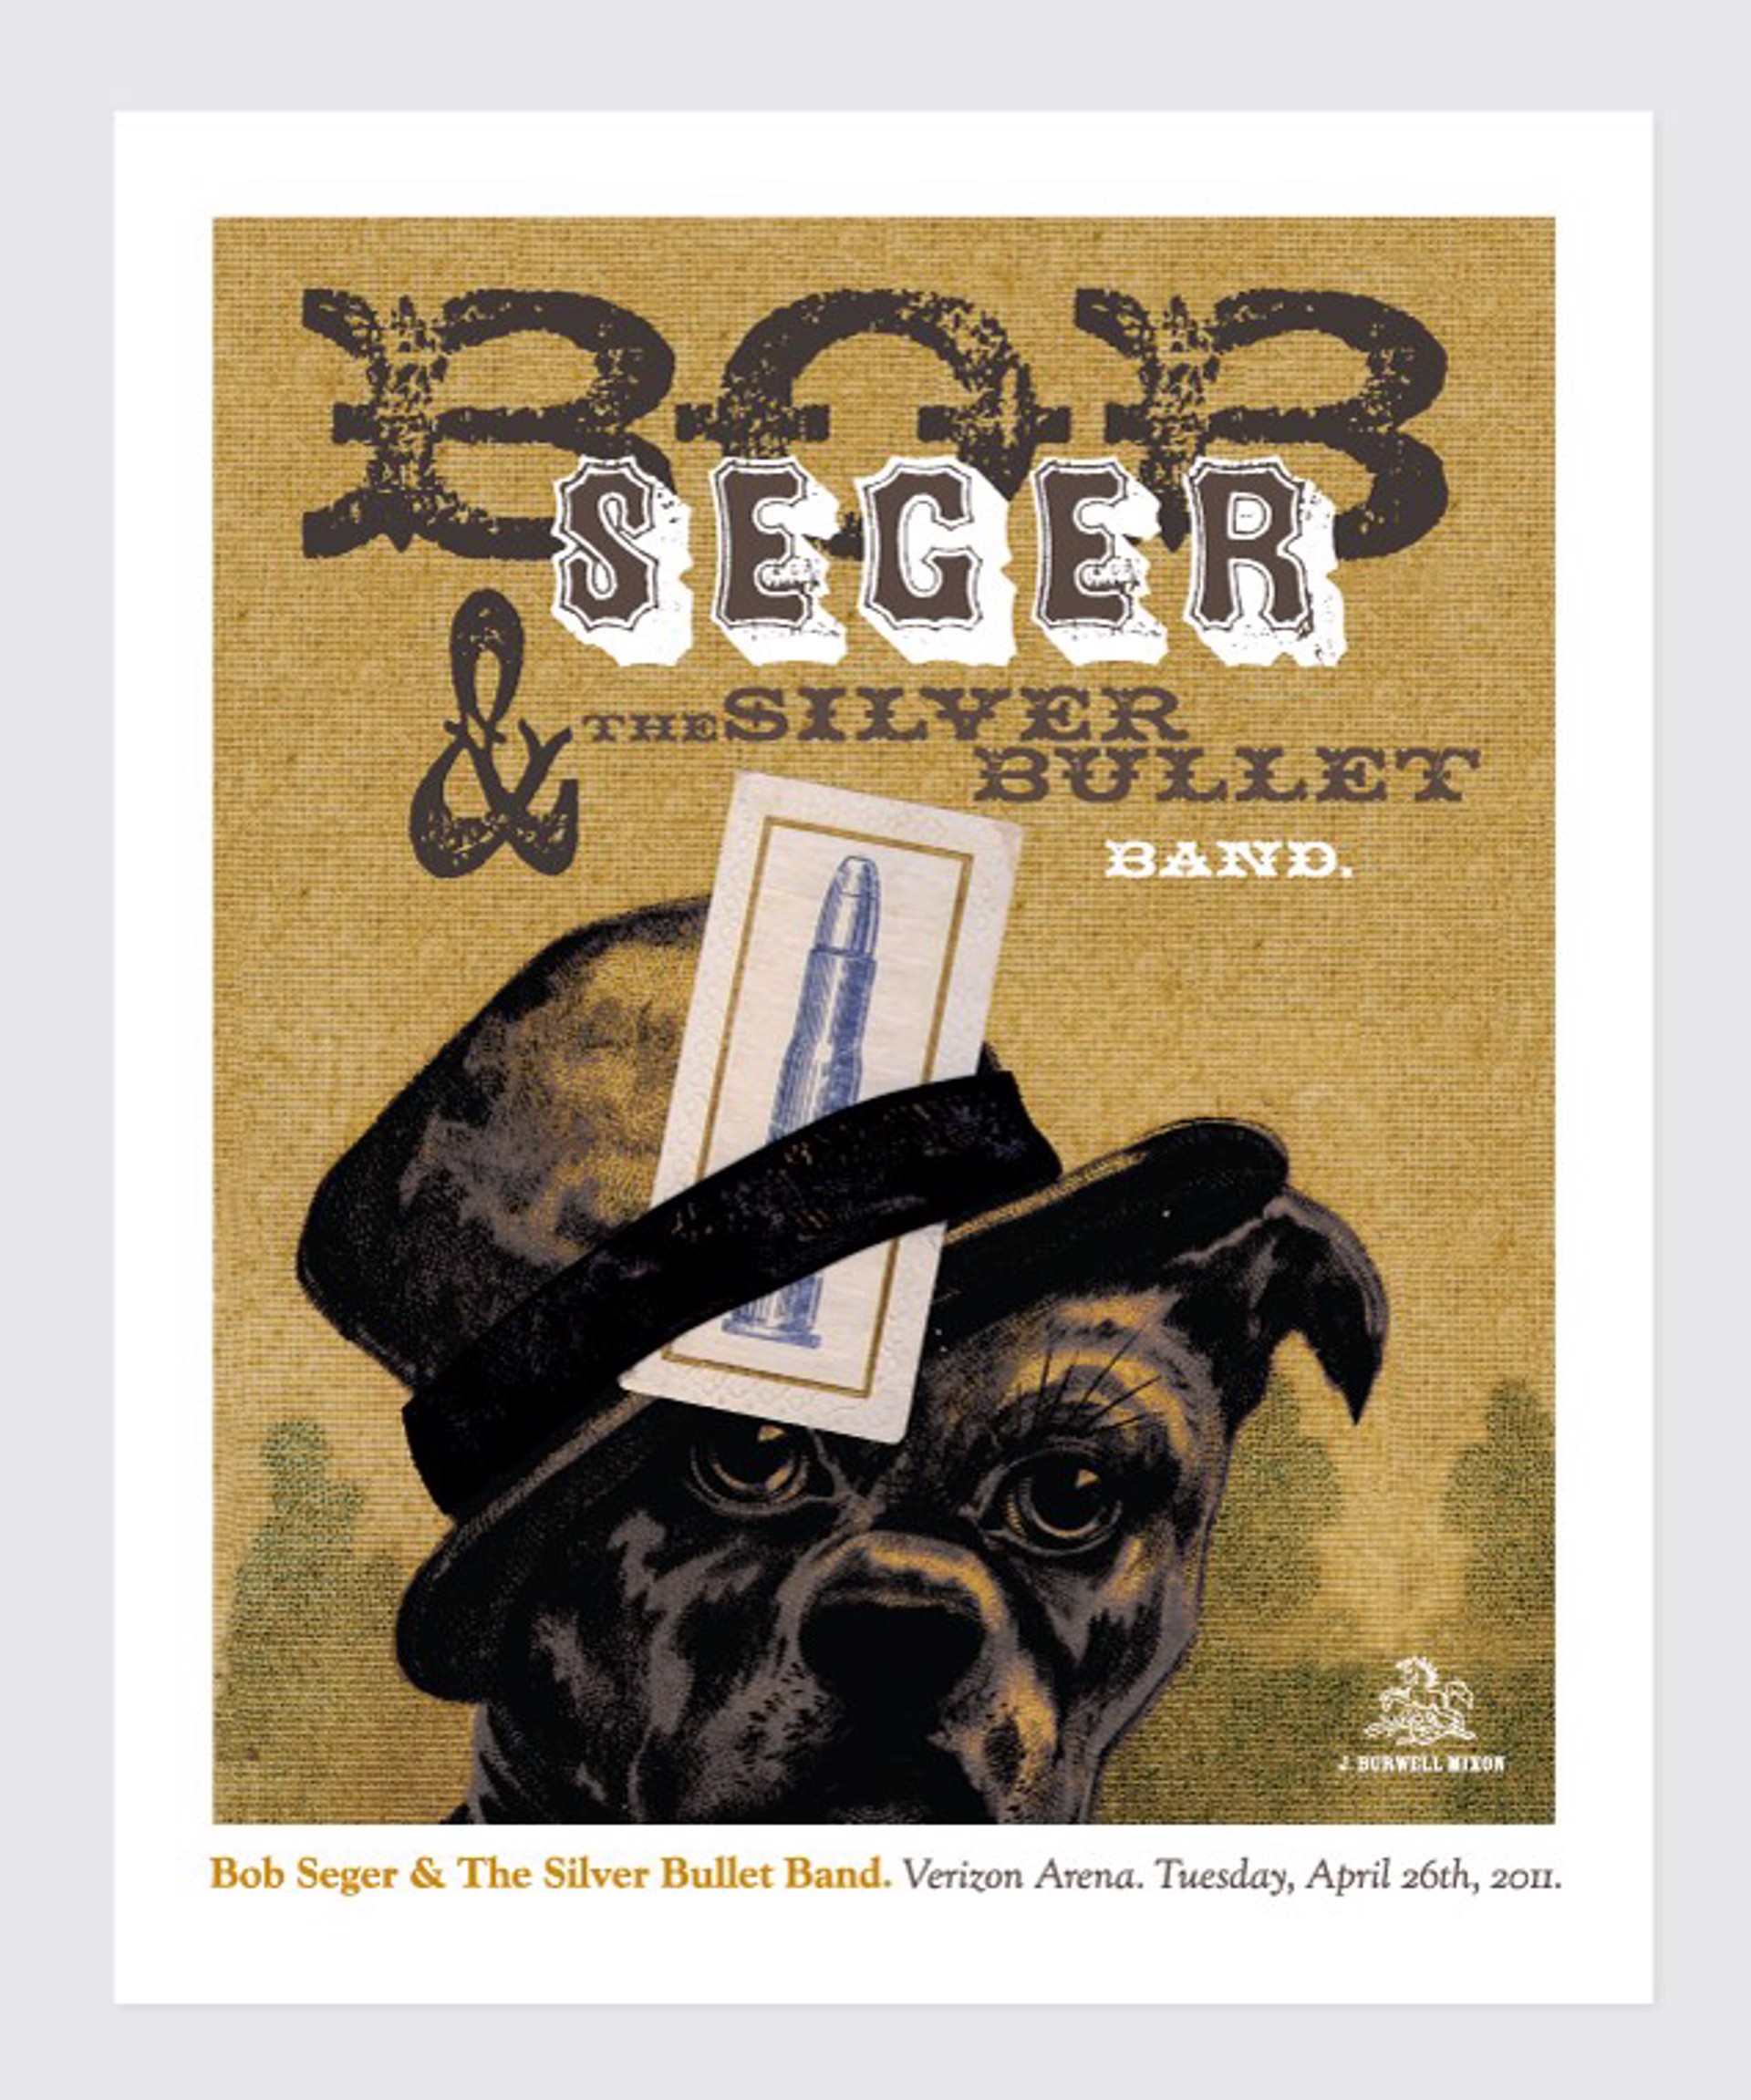 Bob Seger Concert Poster by Jamie Burwell Mixon